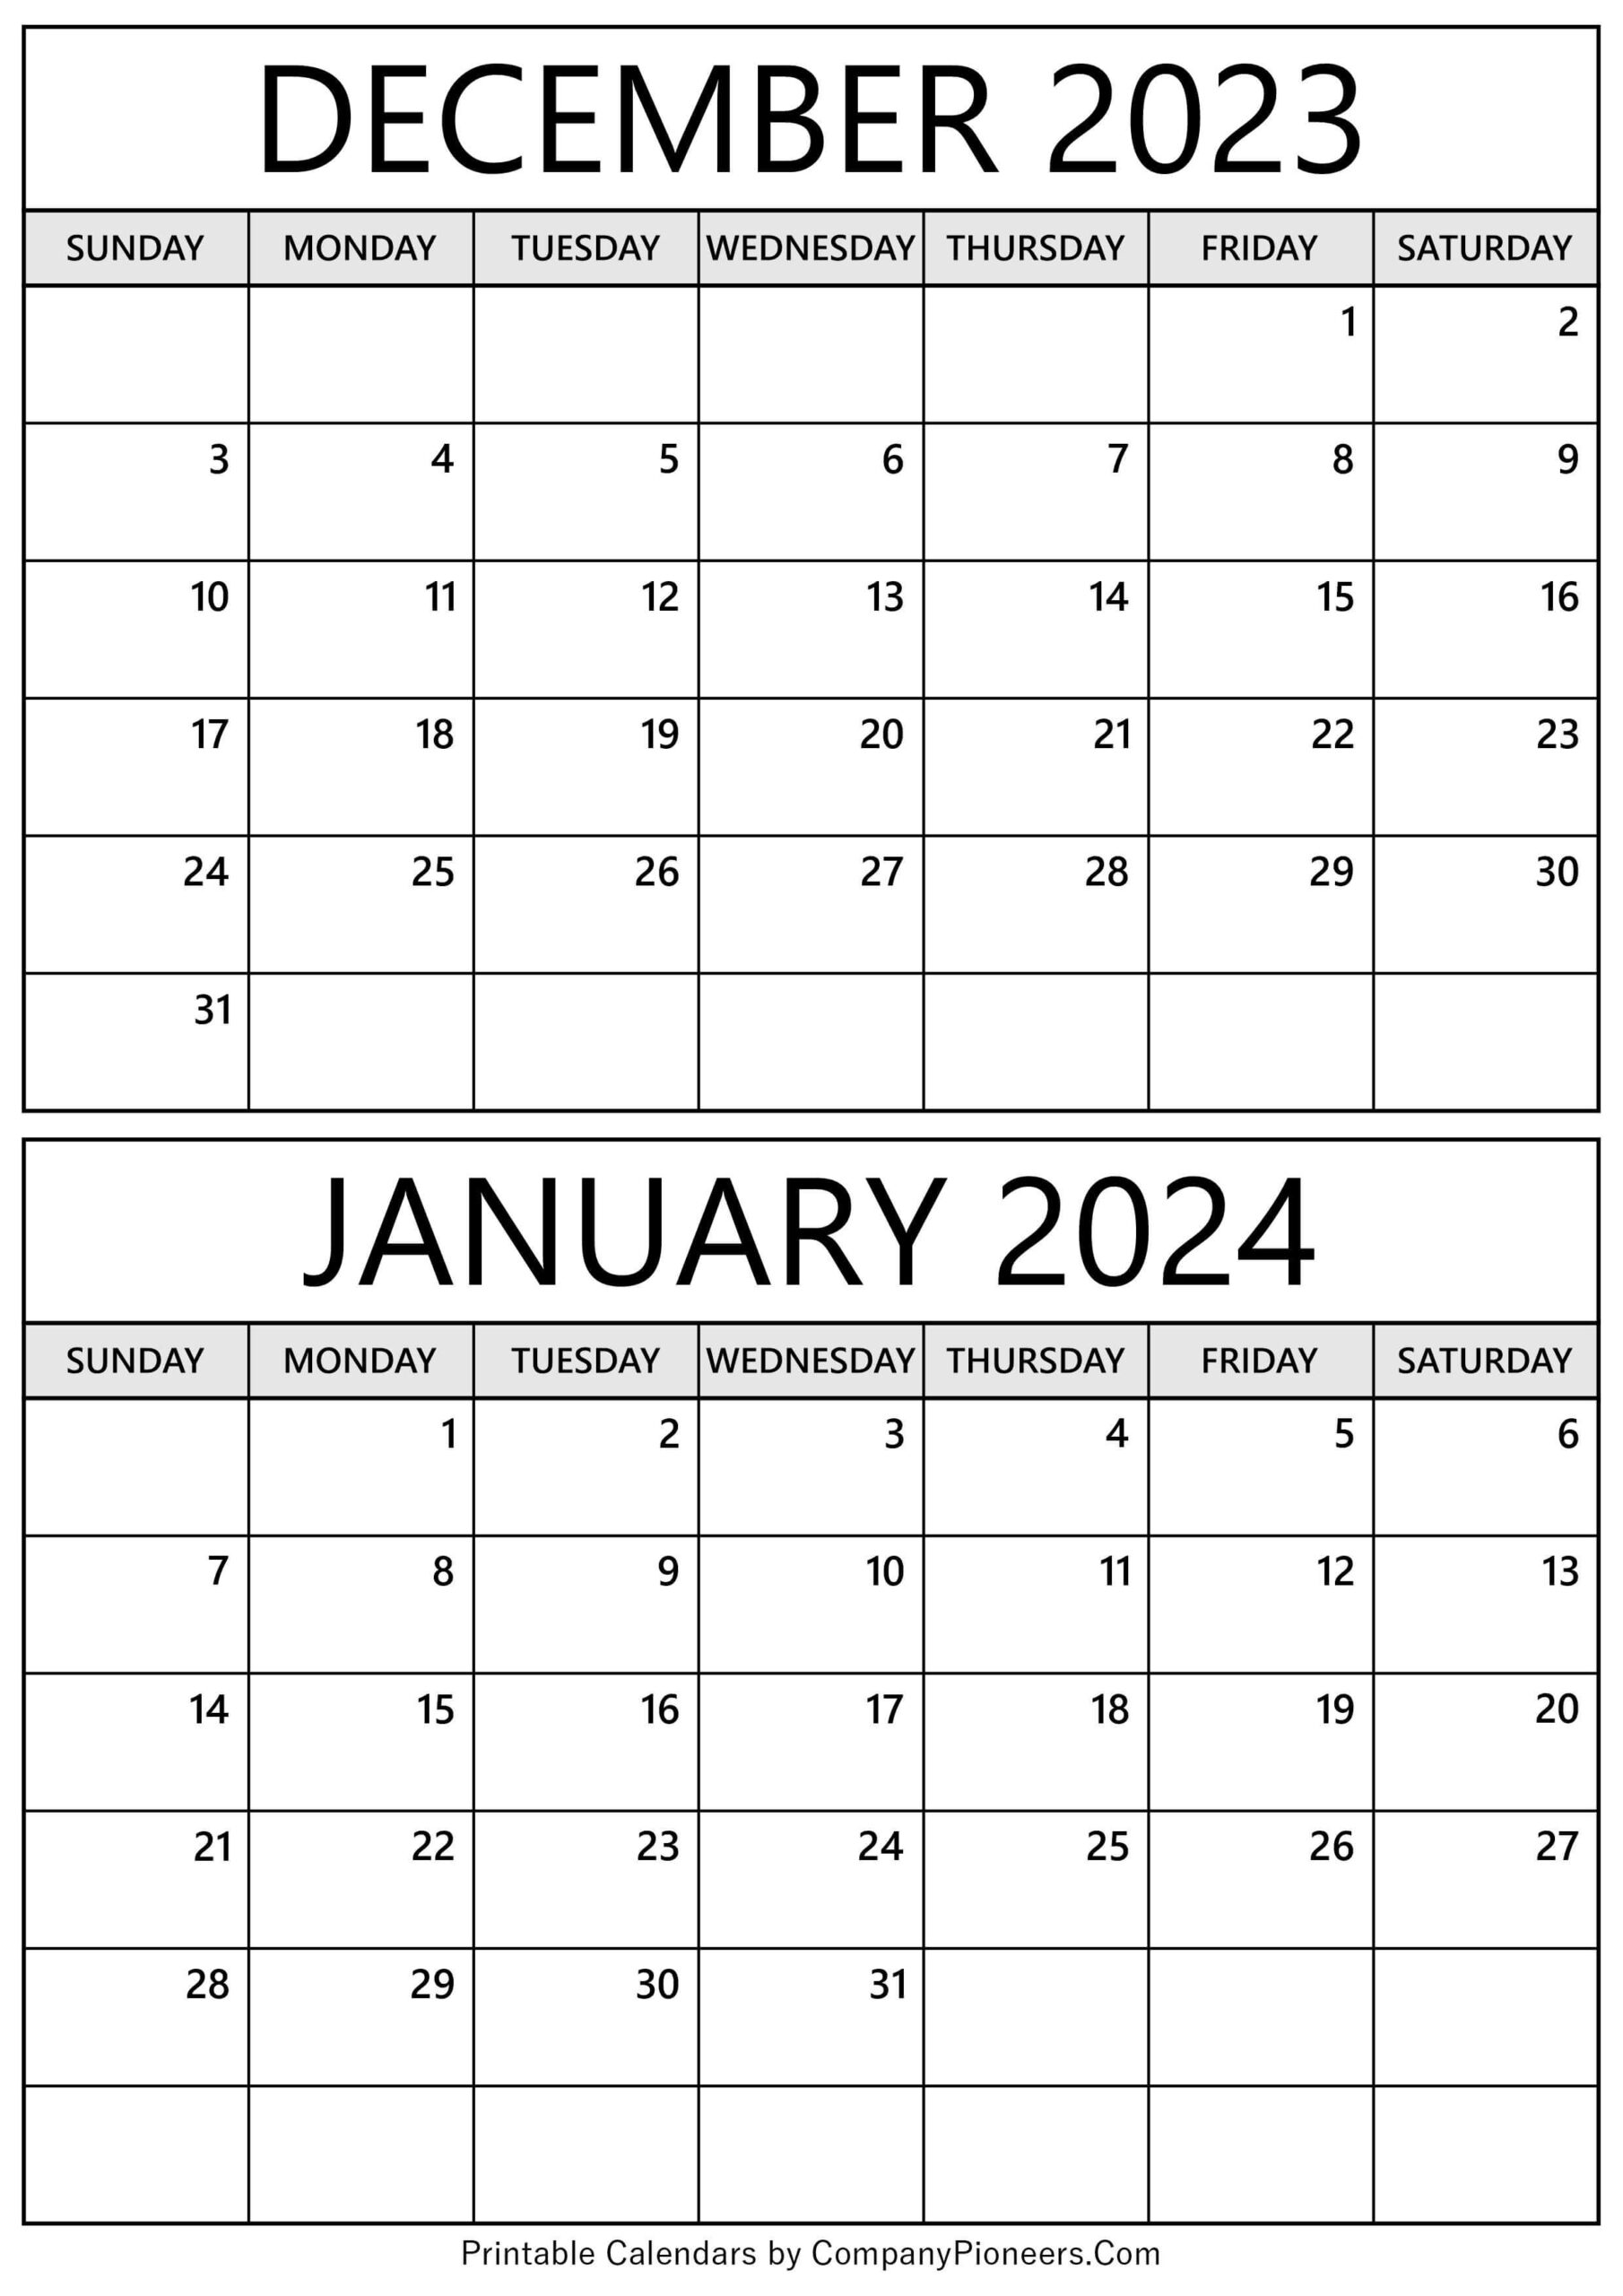 December 2023 January 2024 Calendar Printable - Template for December 2023 January 2024 Printable Calendar